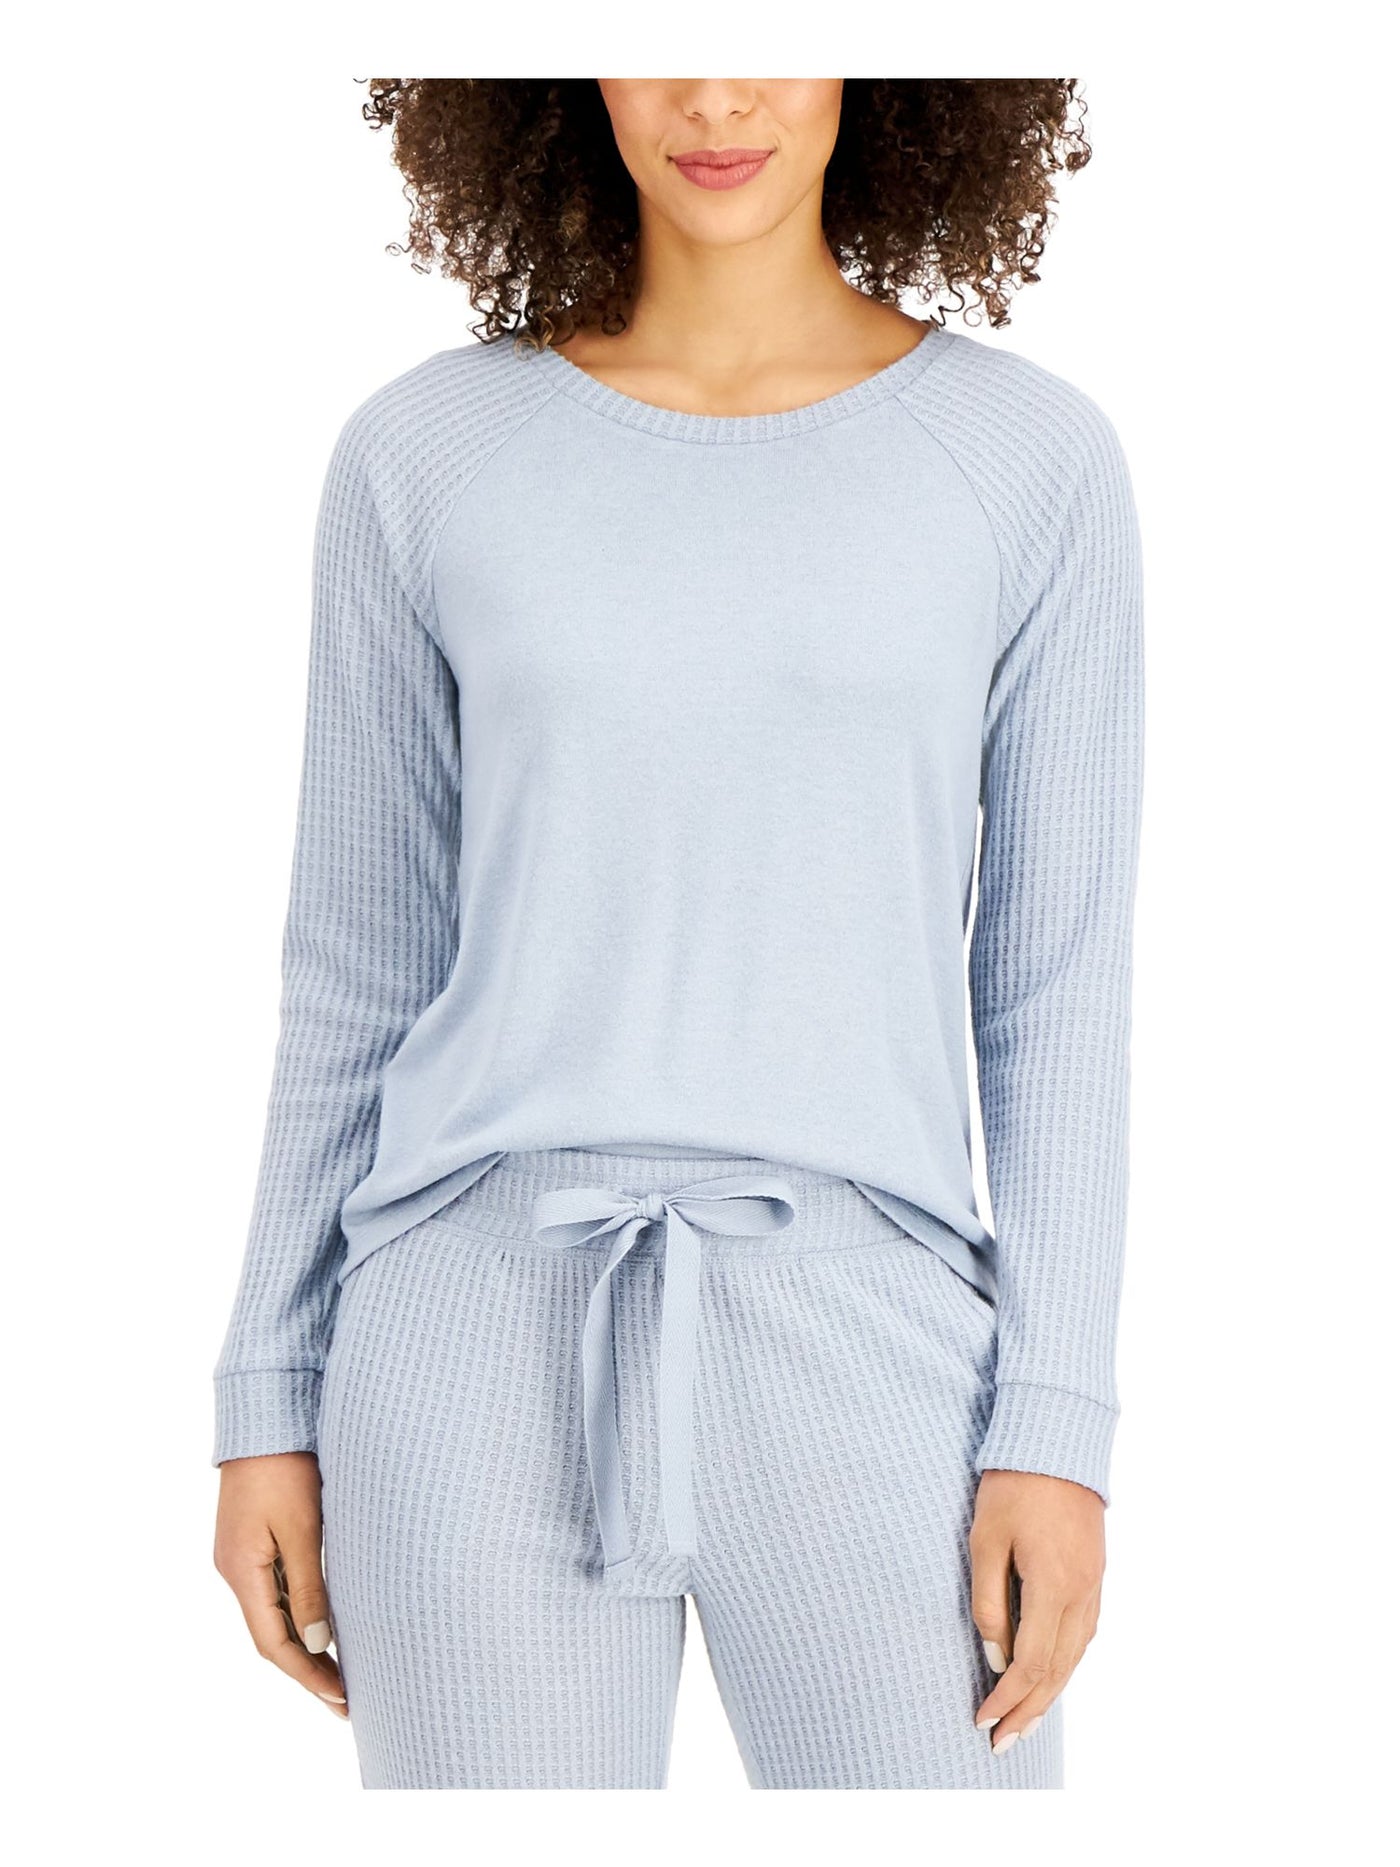 ALFANI Intimates Blue Pullover Sleep Shirt Pajama Top XS